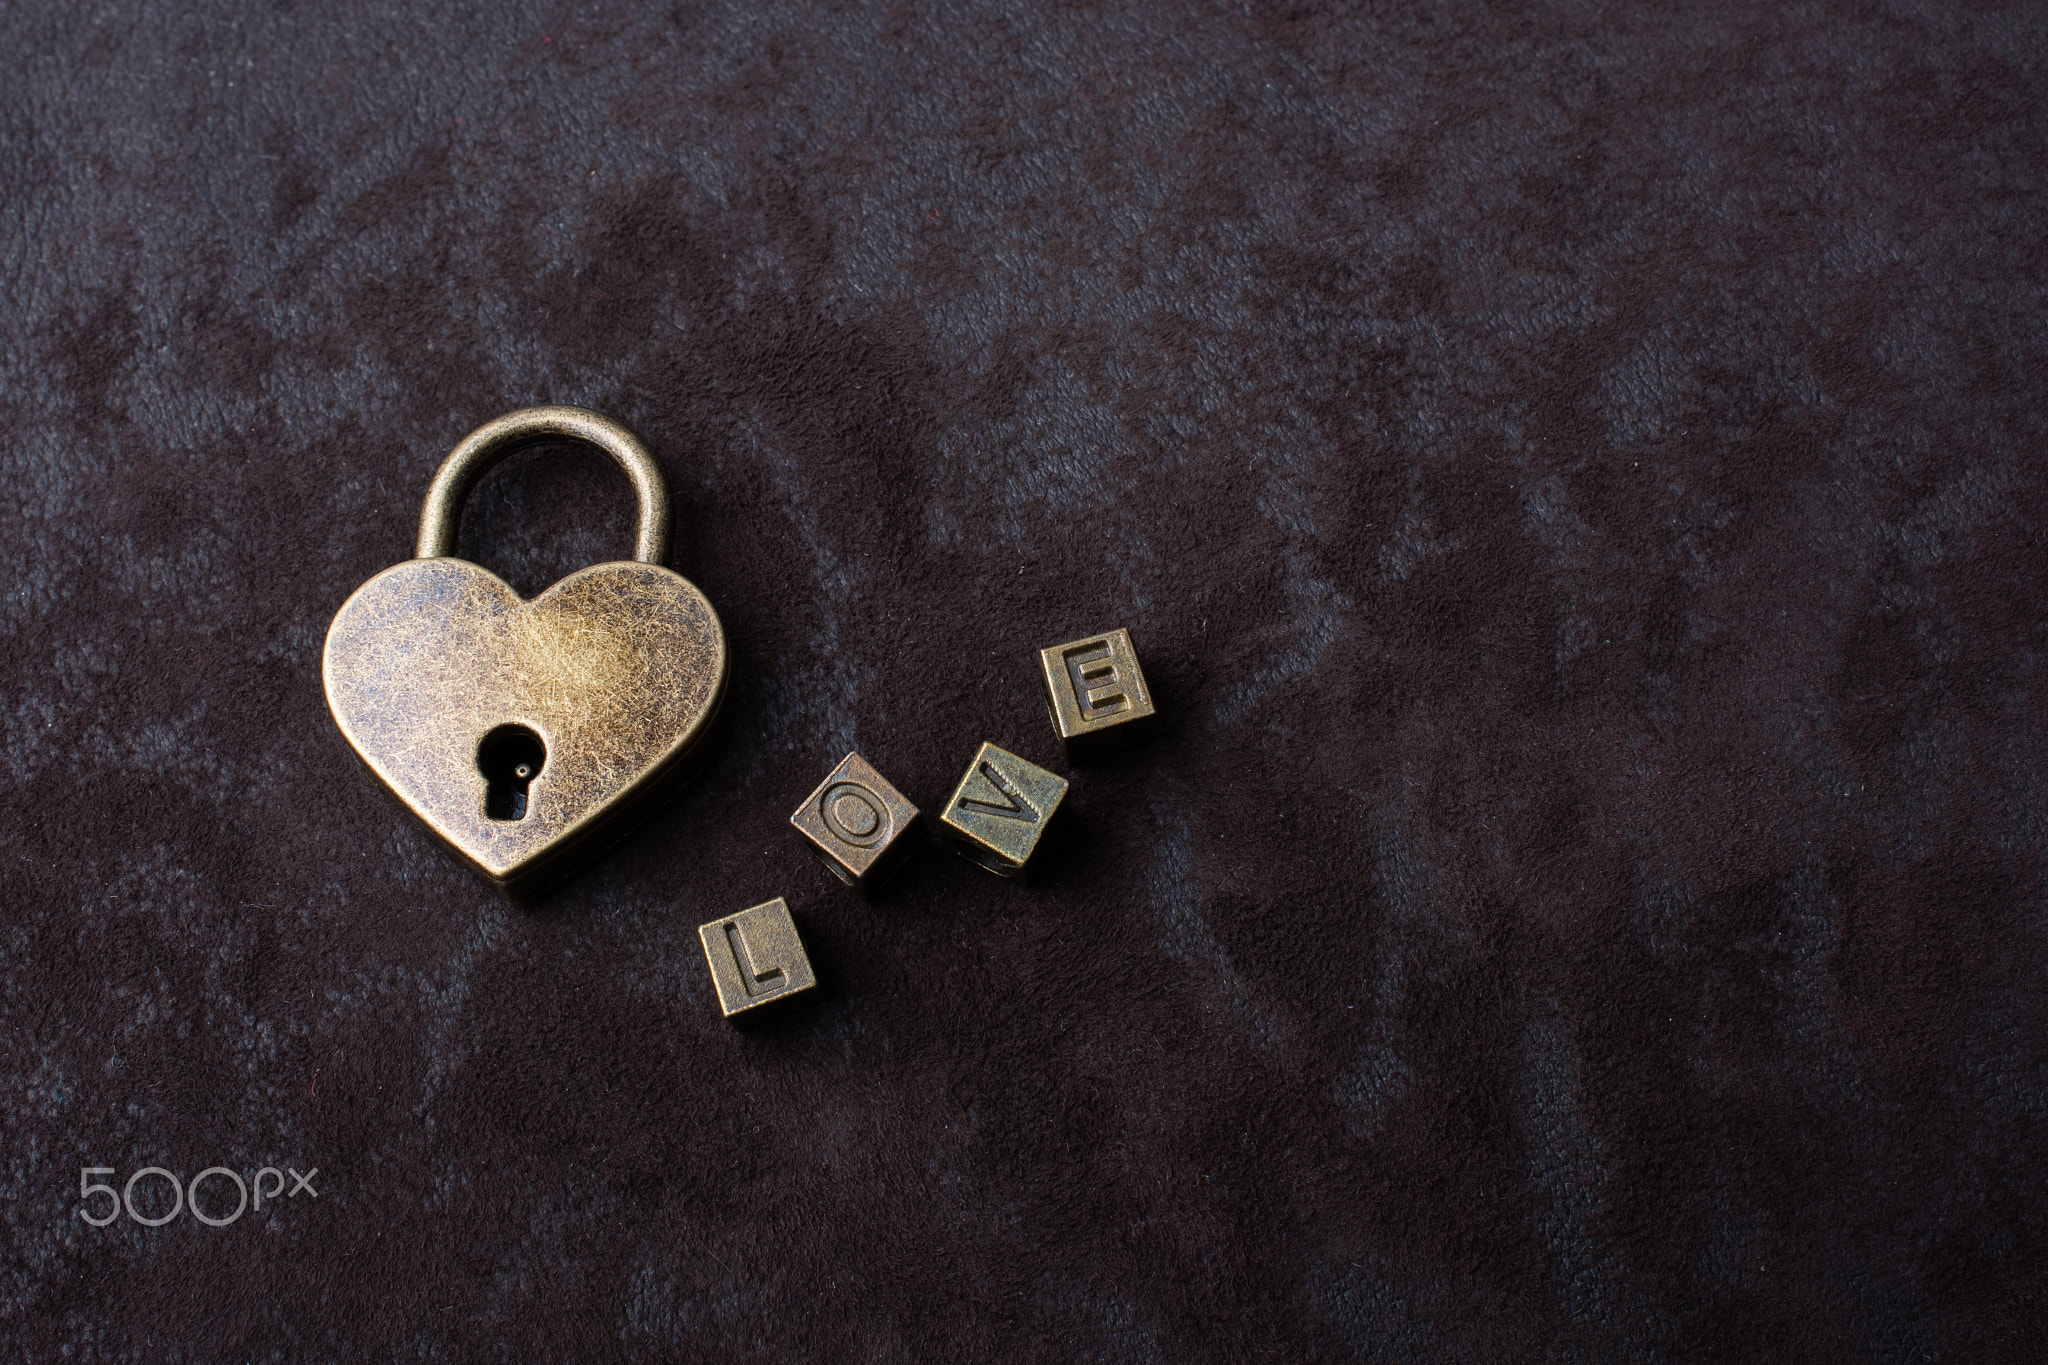 Love shaped padlock, key and love wording